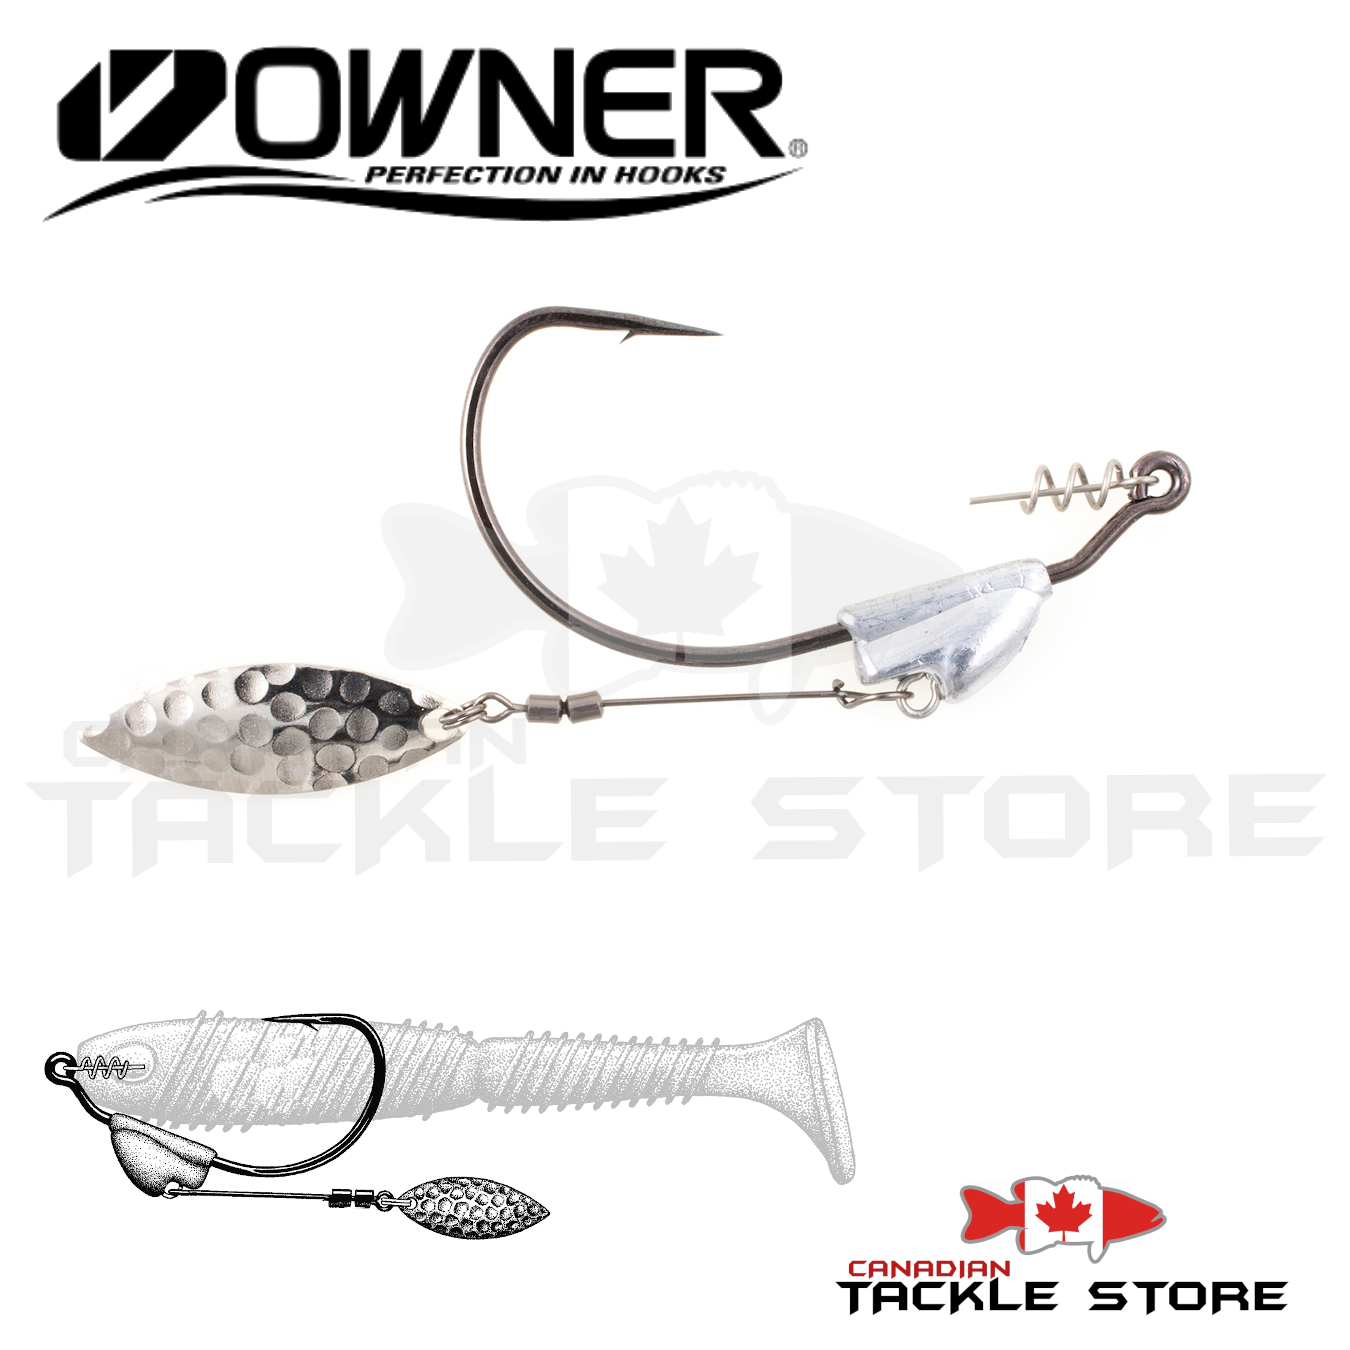 Owner Twistlock Hook Size 6/0